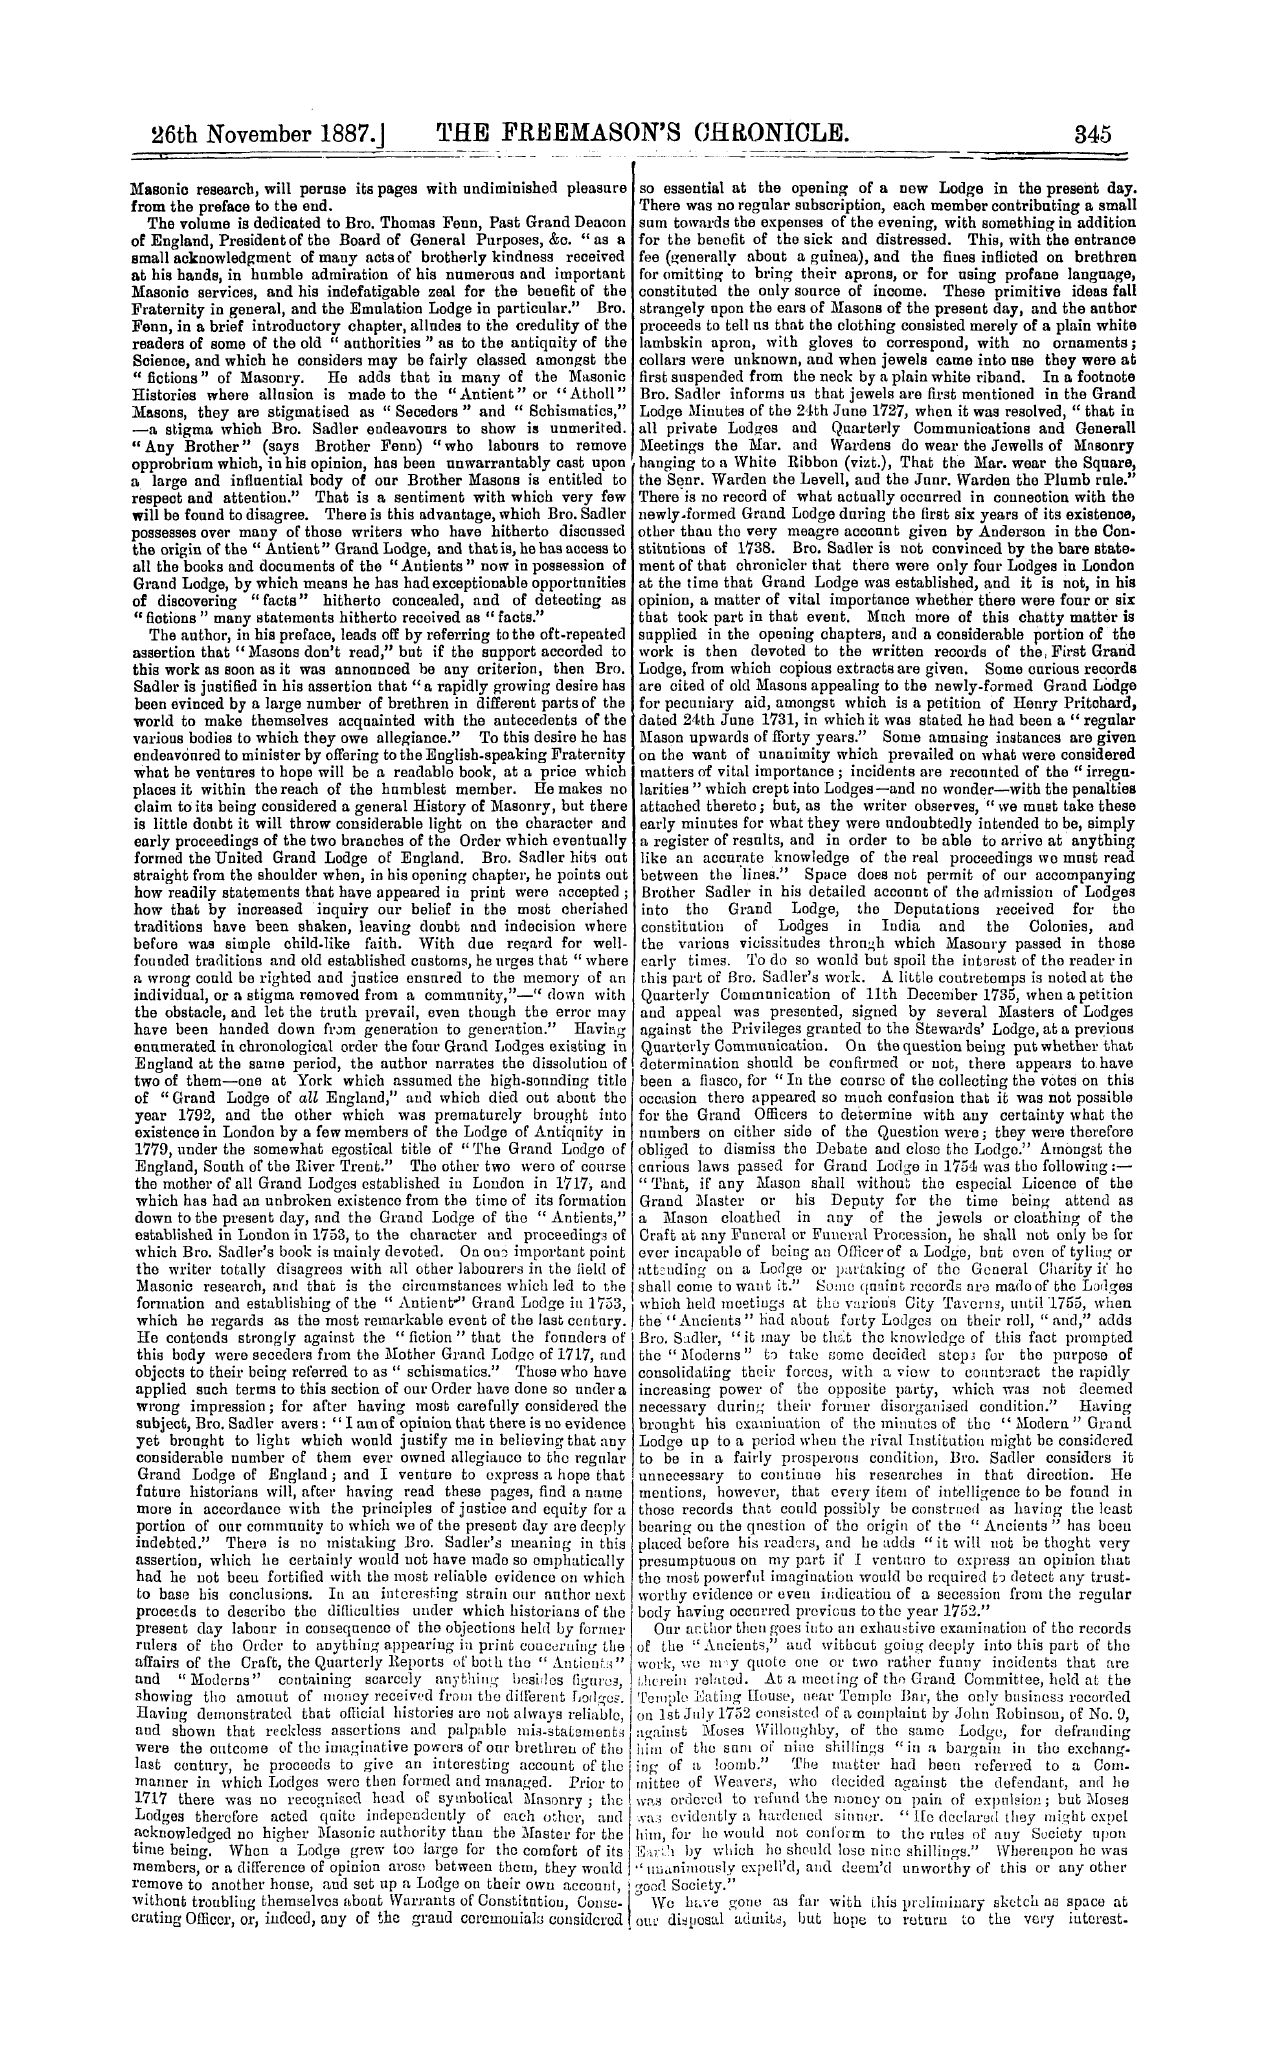 The Freemason's Chronicle: 1887-11-26 - Reviews.